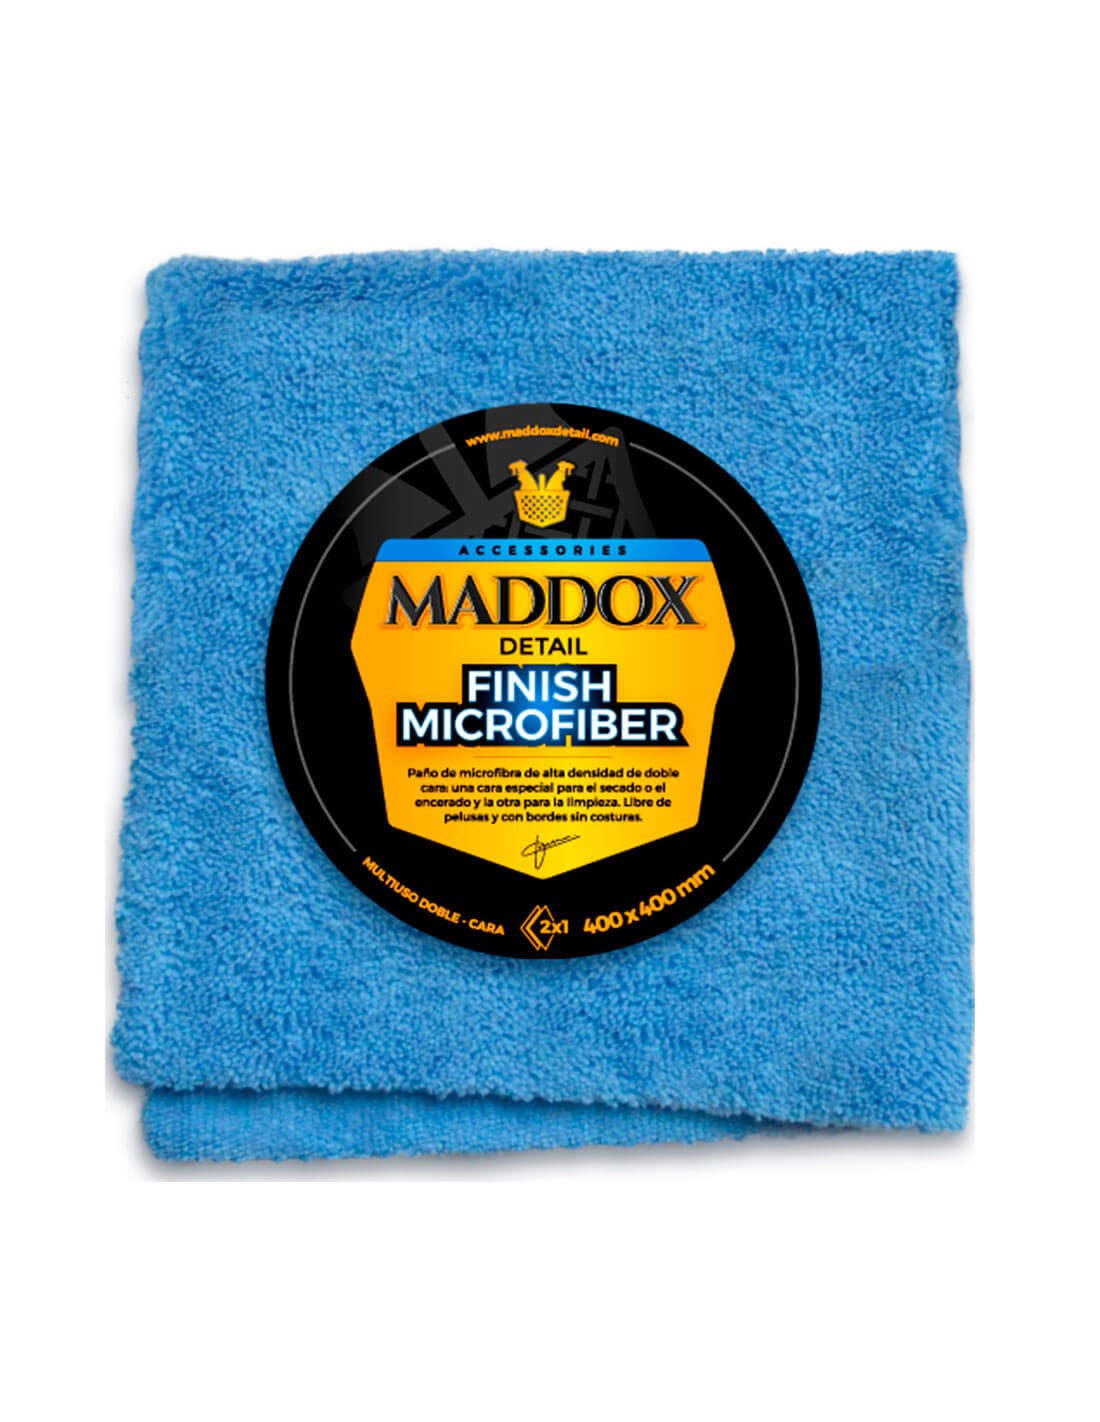 Paño Microfibra - Maddox Finish Microfiber